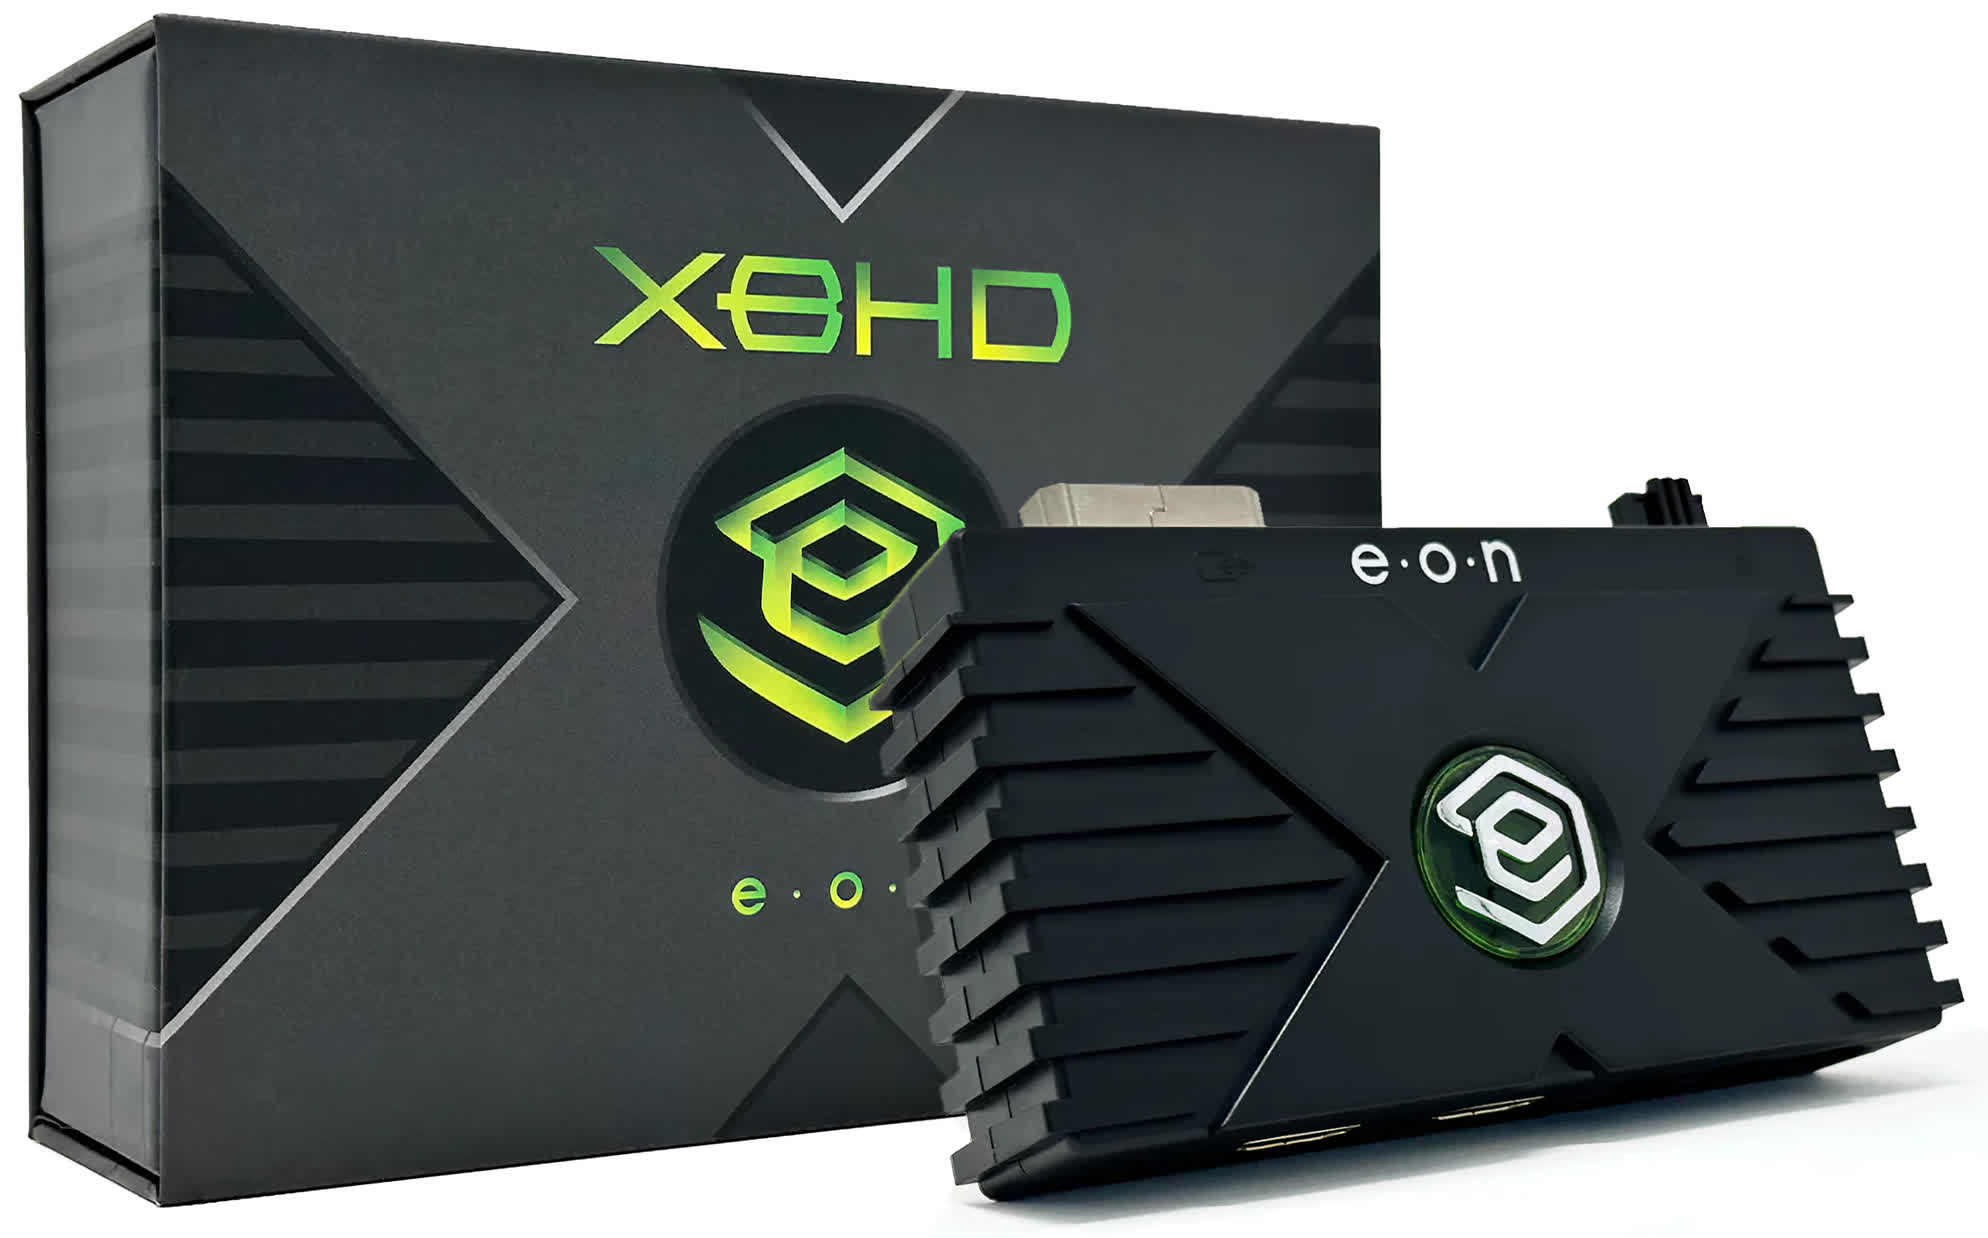 XBHD brings the original Xbox into the modern era